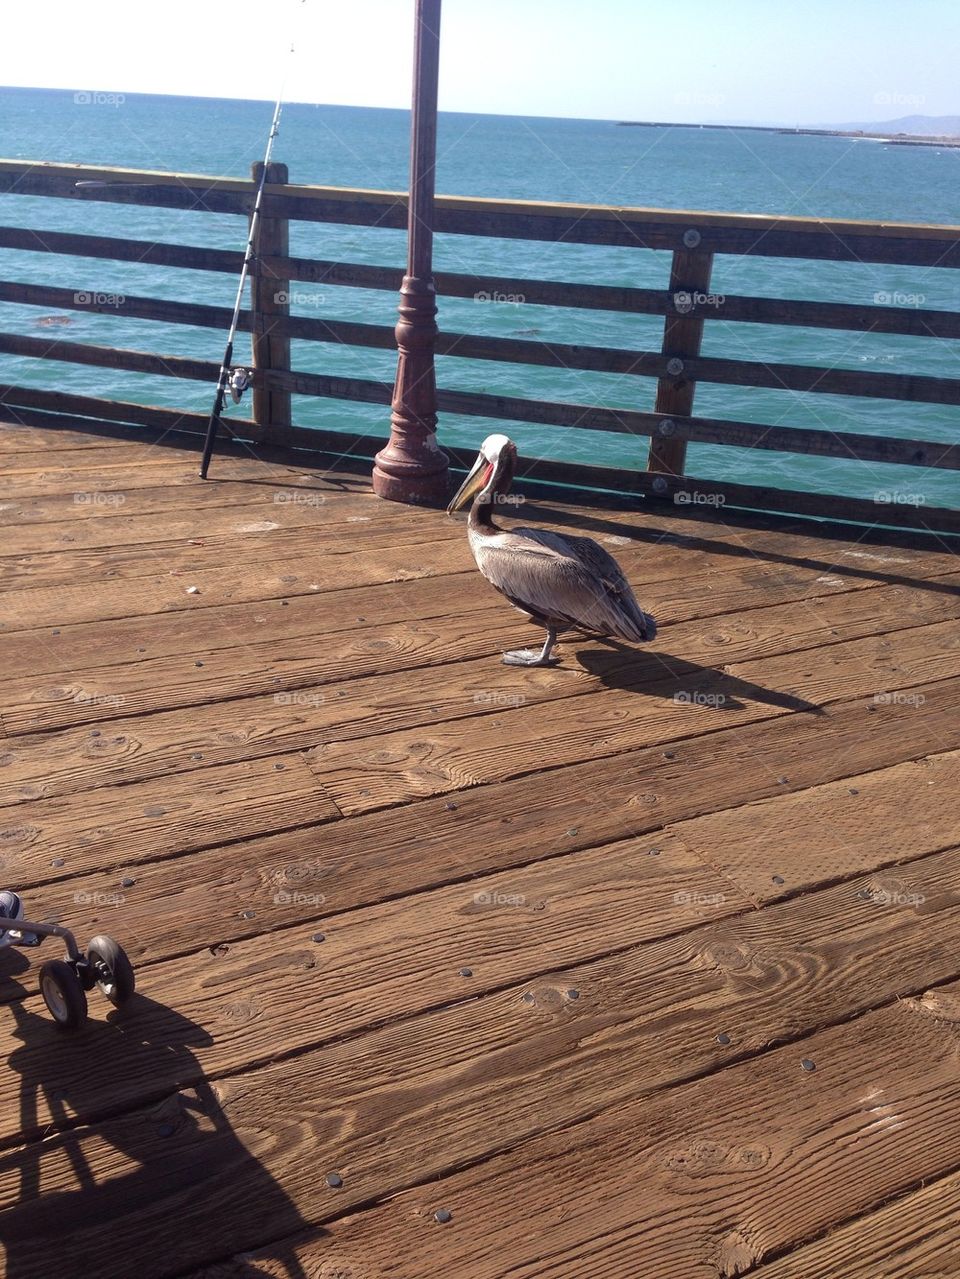 Bird of the pier 